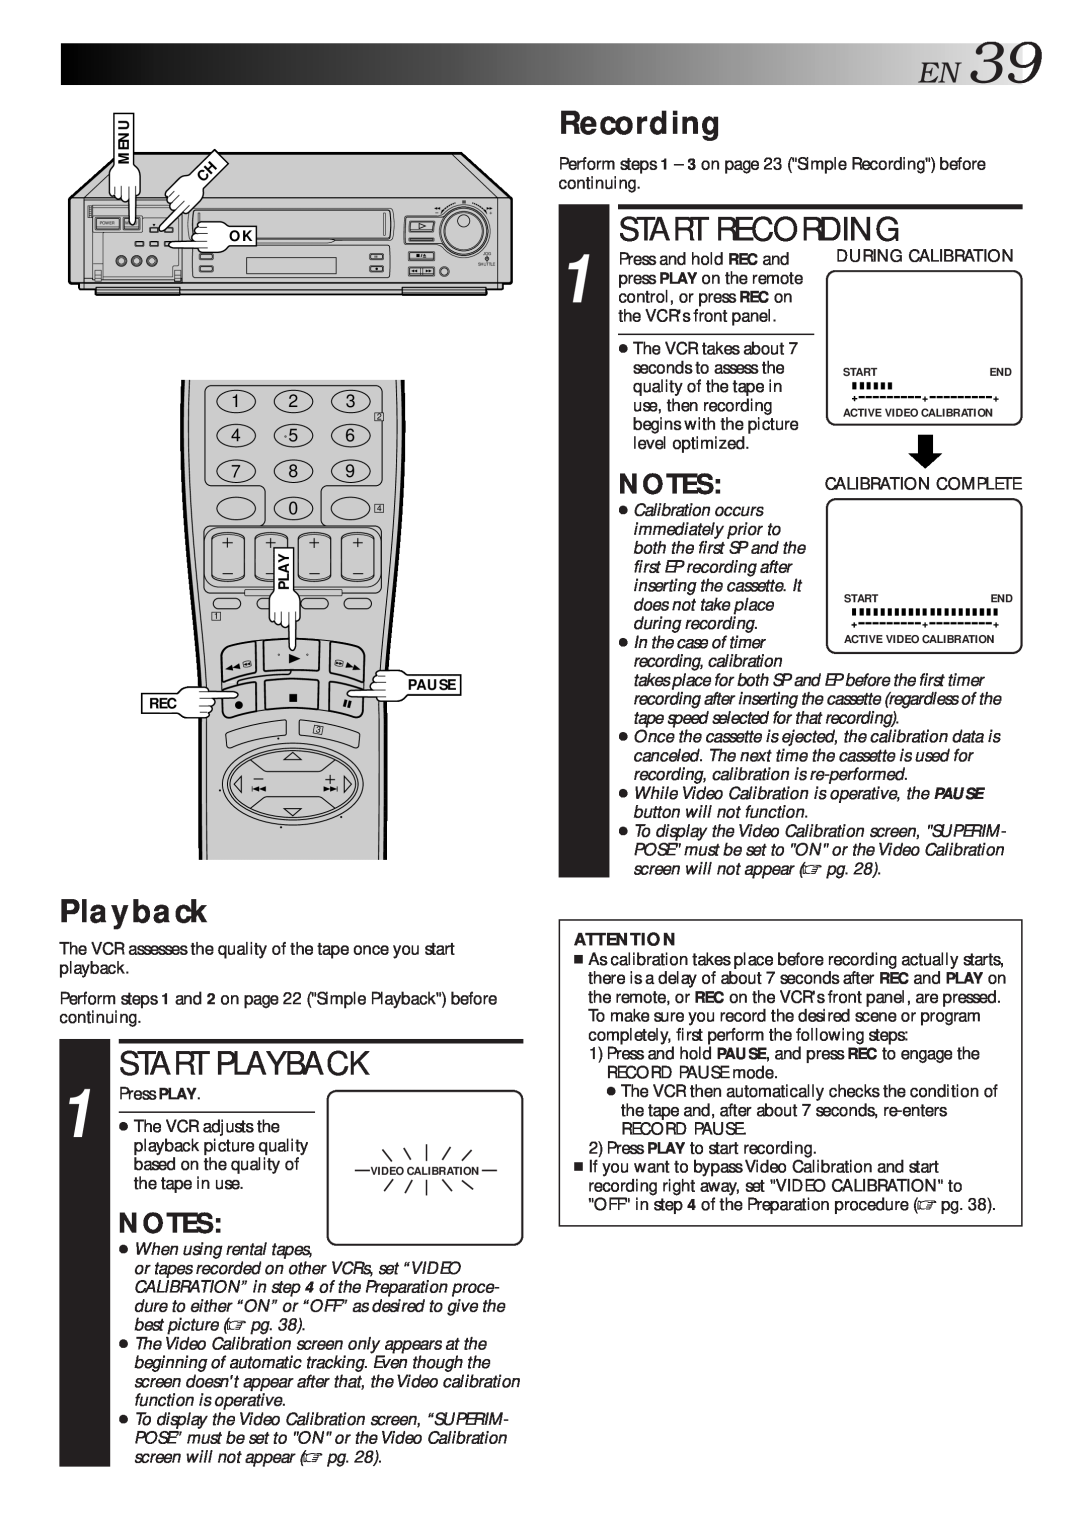 JVC HR-S7500U manual EN39, Start Playback, Start Recording 